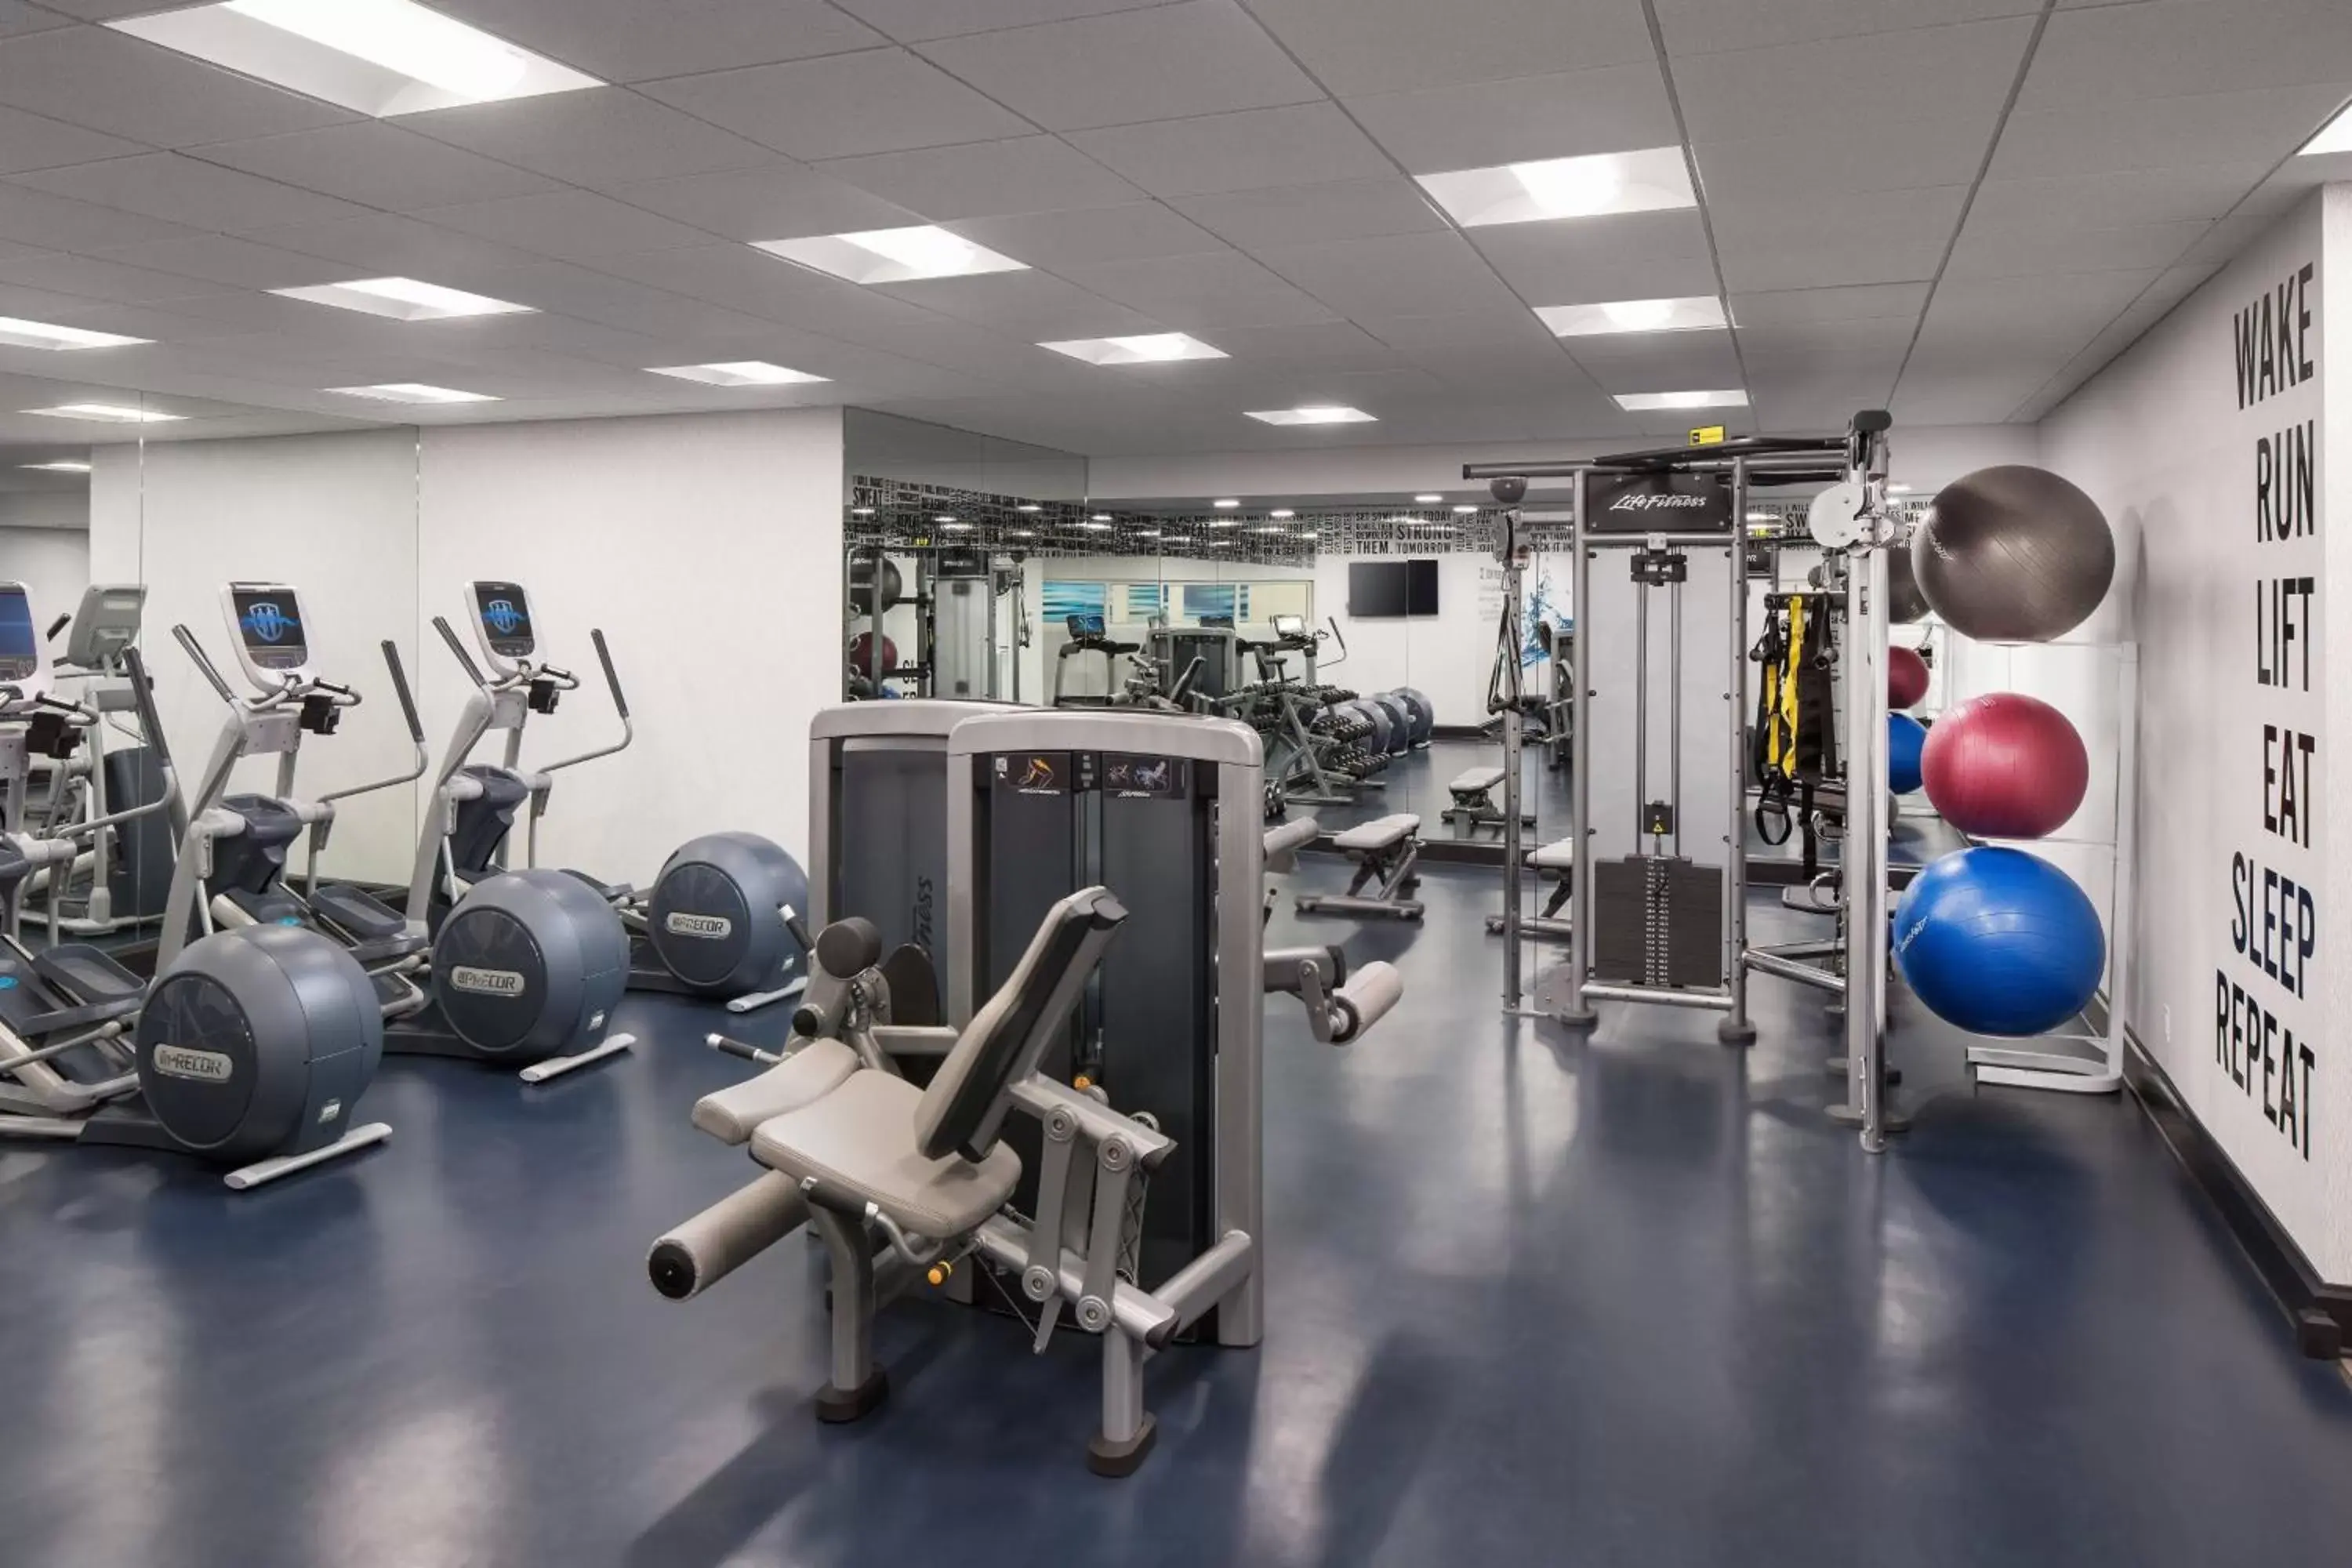 Fitness centre/facilities, Fitness Center/Facilities in Irvine Marriott